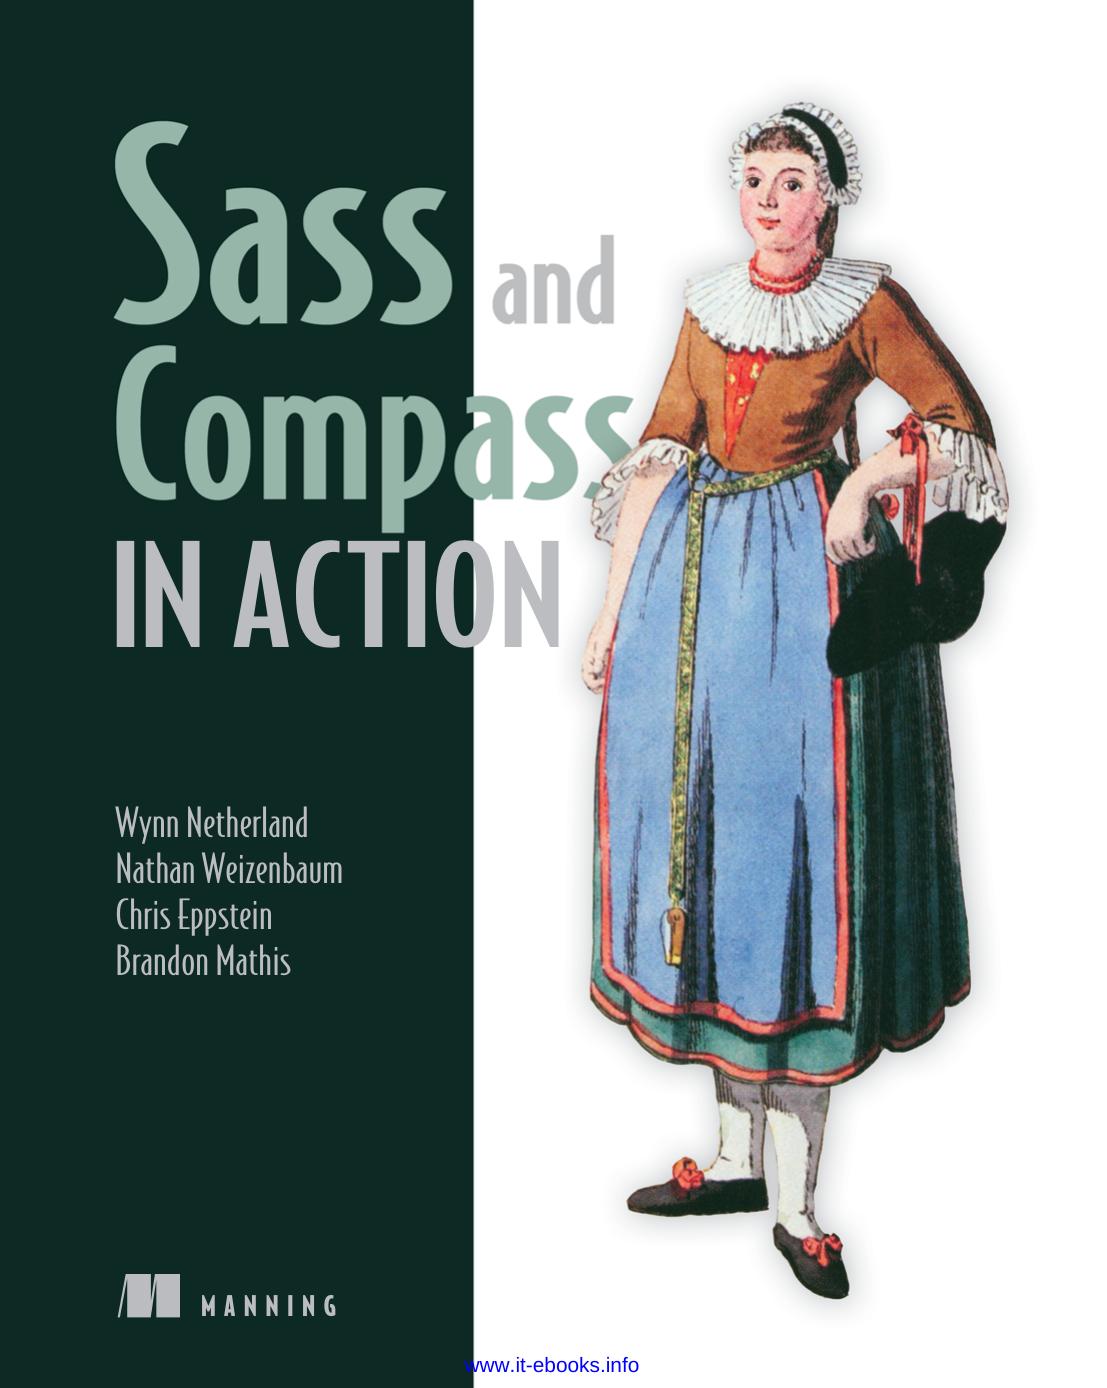 Sass and Compass in Action by Wynn Netherland Nathan Weizenbaum Chris Eppstein Brandon Mathis